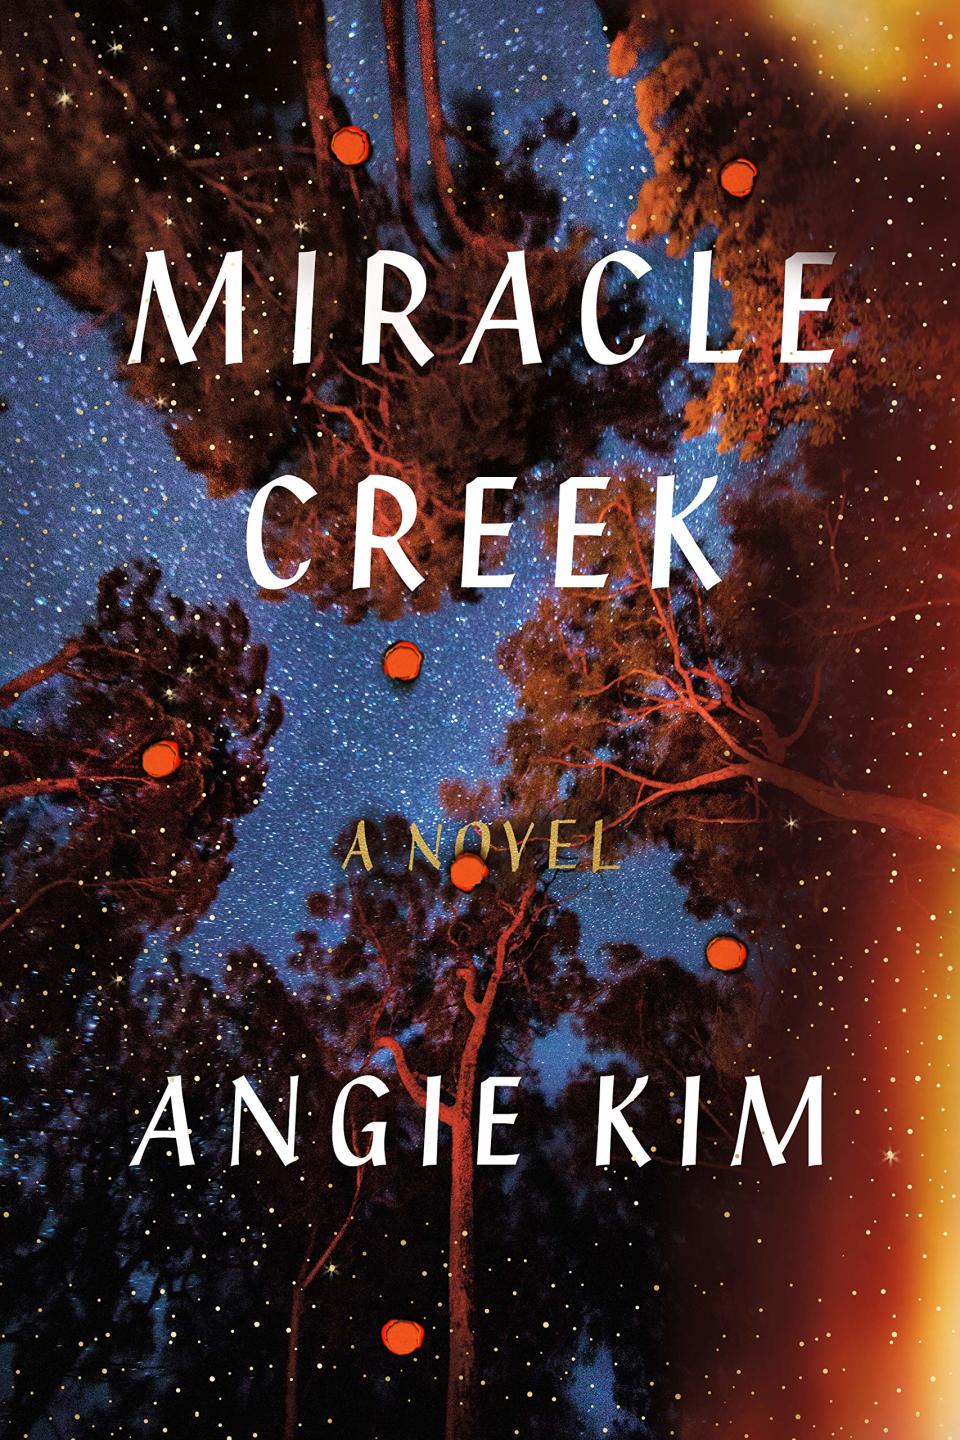 <a href="https://www.amazon.com/Miracle-Creek-Novel-Angie-Kim/dp/0374156026"><em>Miracle Creek</em> by Angie Kim</a>